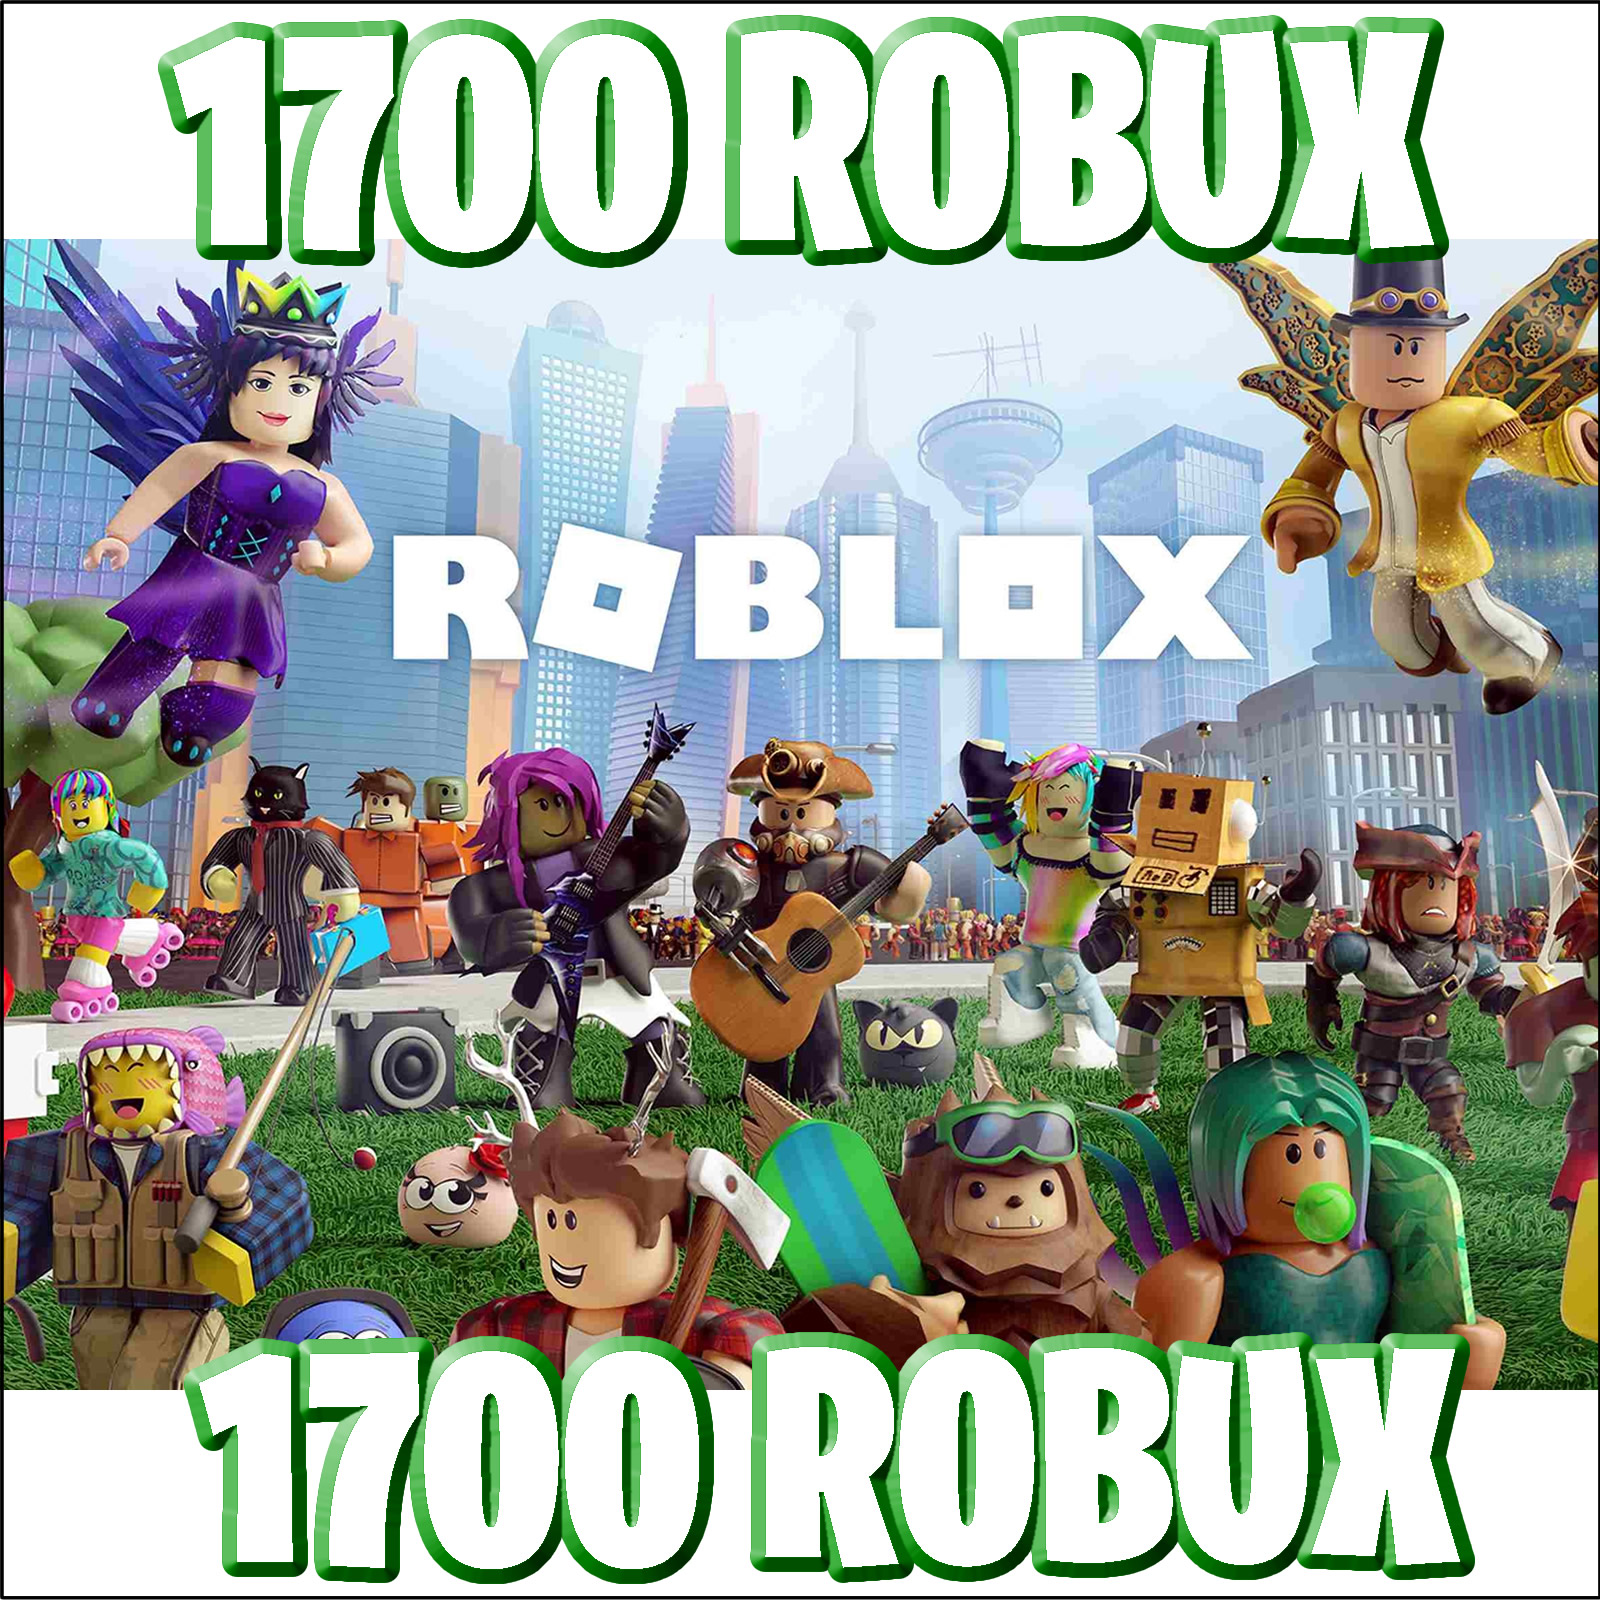 1700 Robux - roblox 10000 robux need login id and password kaleoz